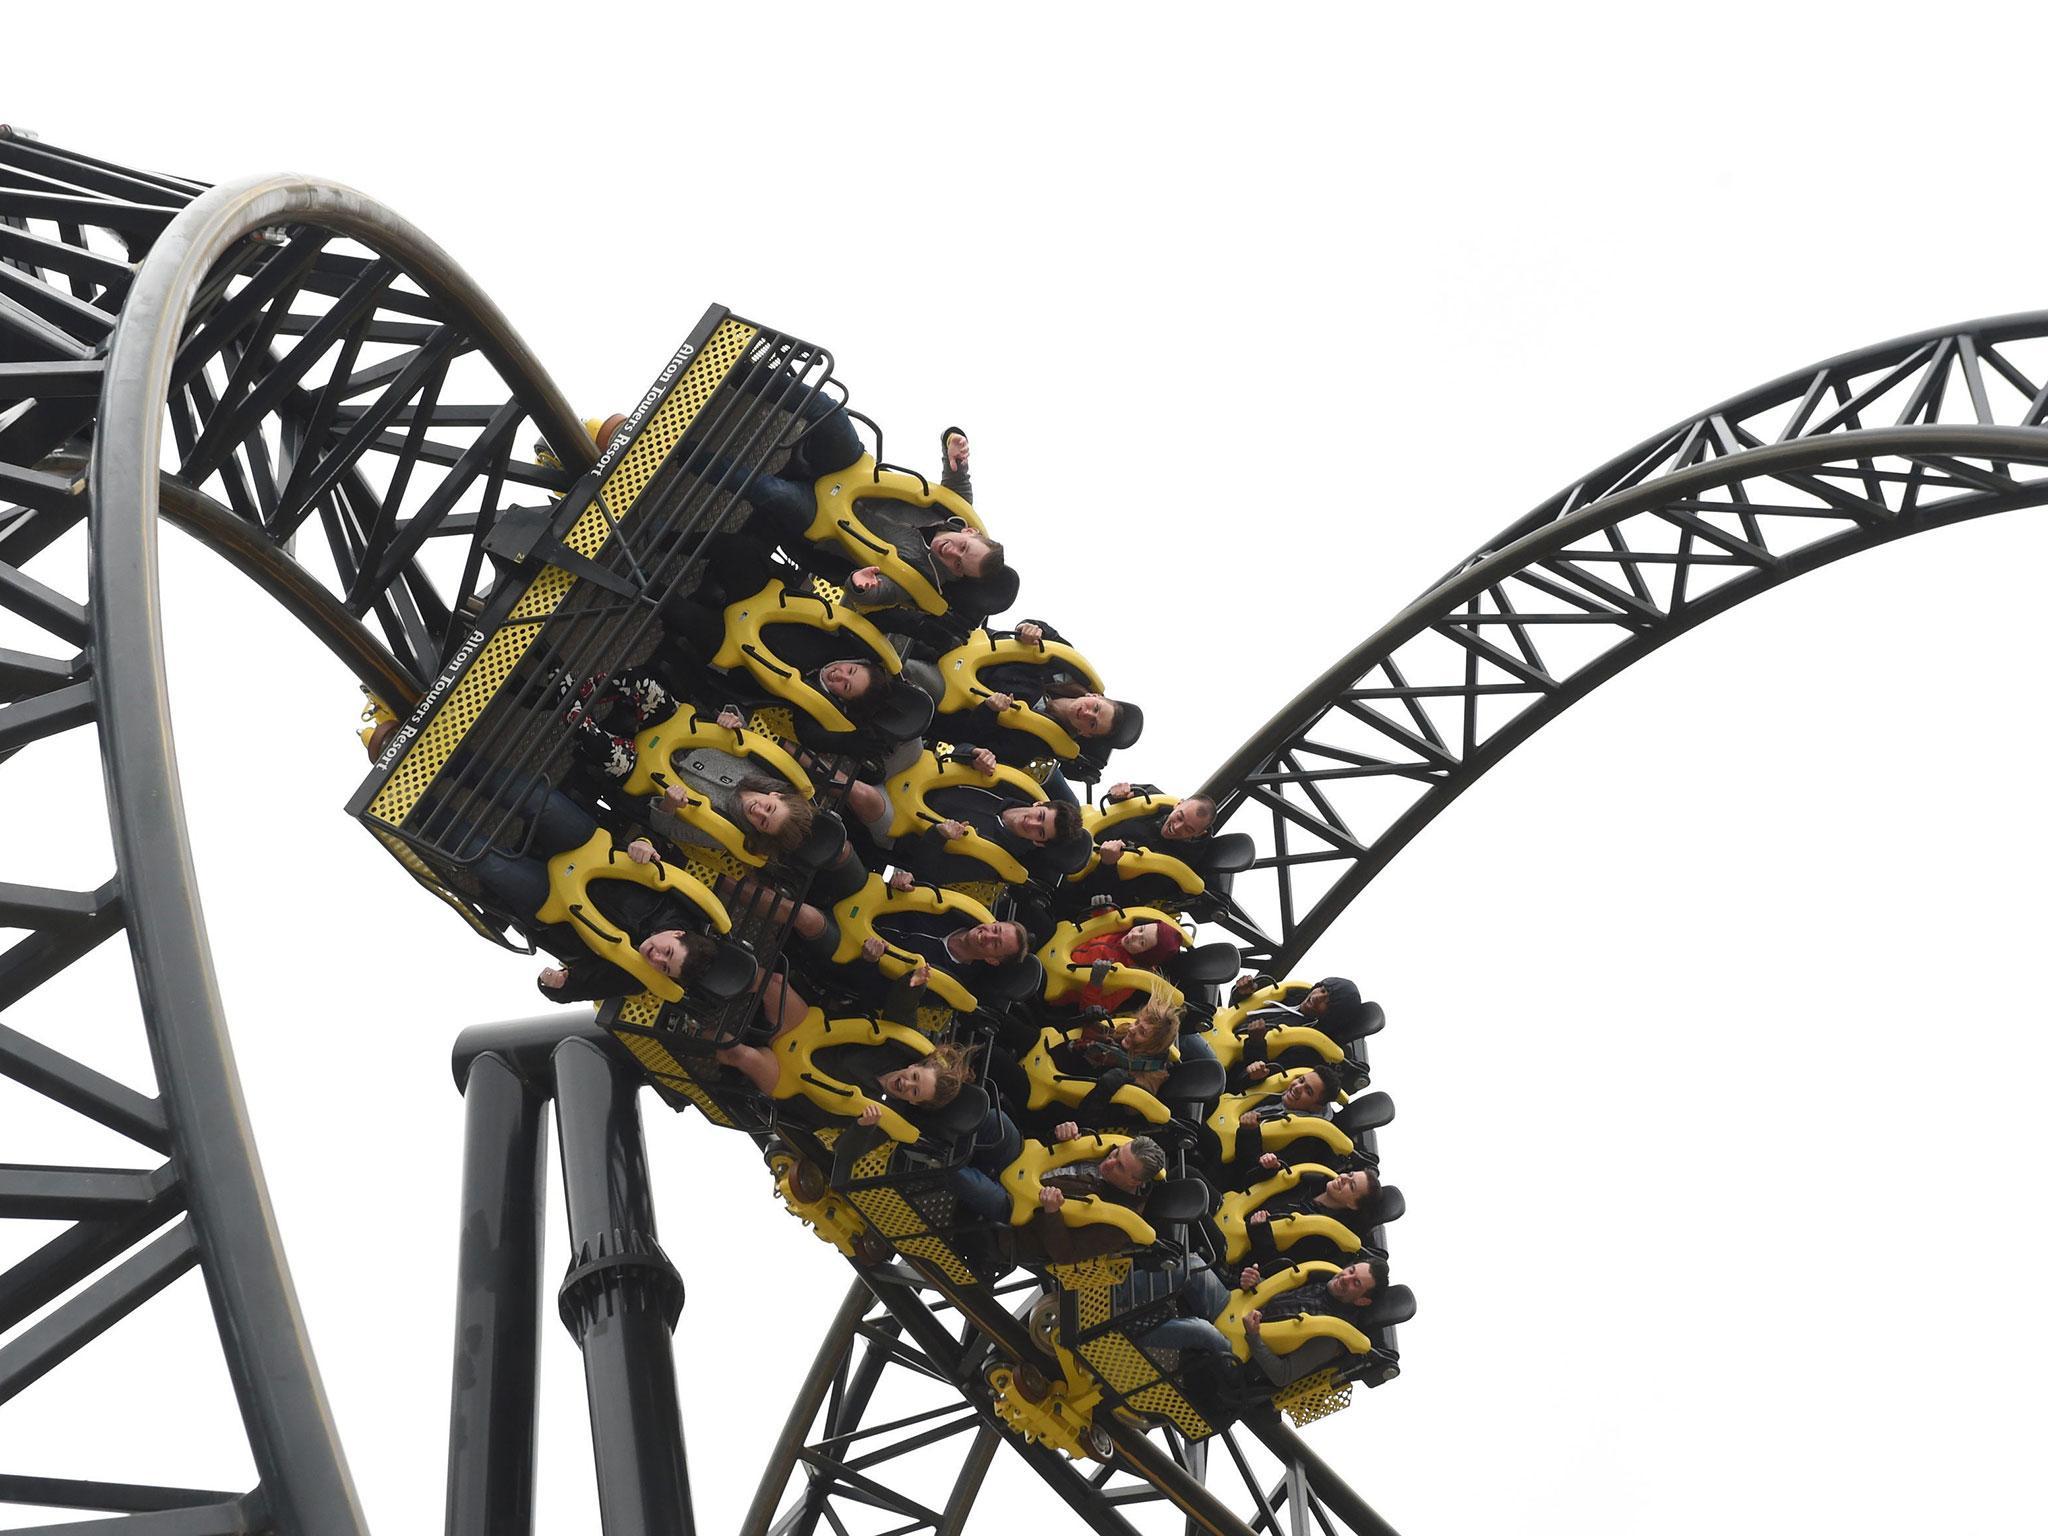 the smiler roller coaster